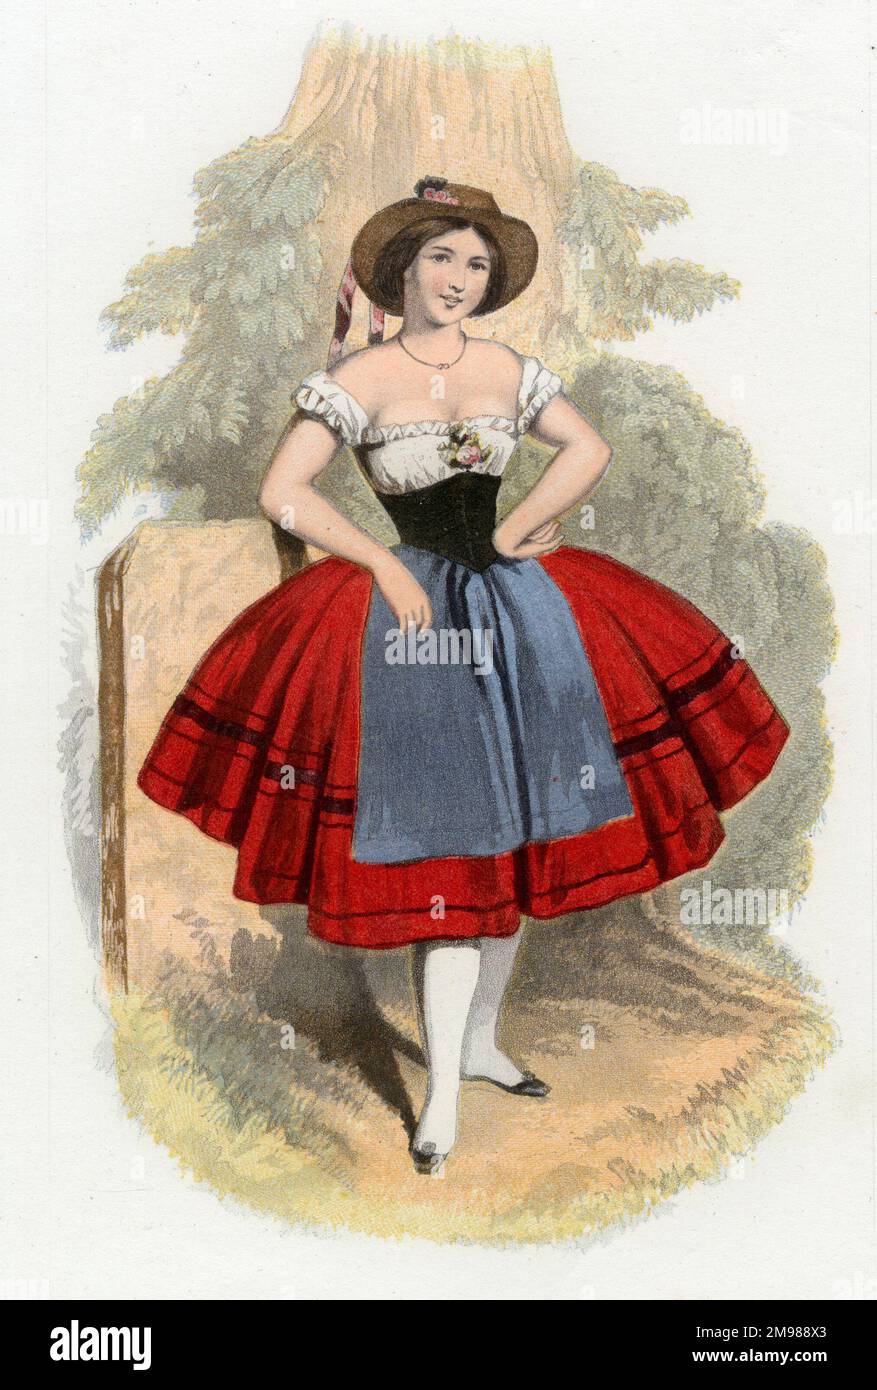 Victorian Ballerina in folk costume Stock Photo - Alamy